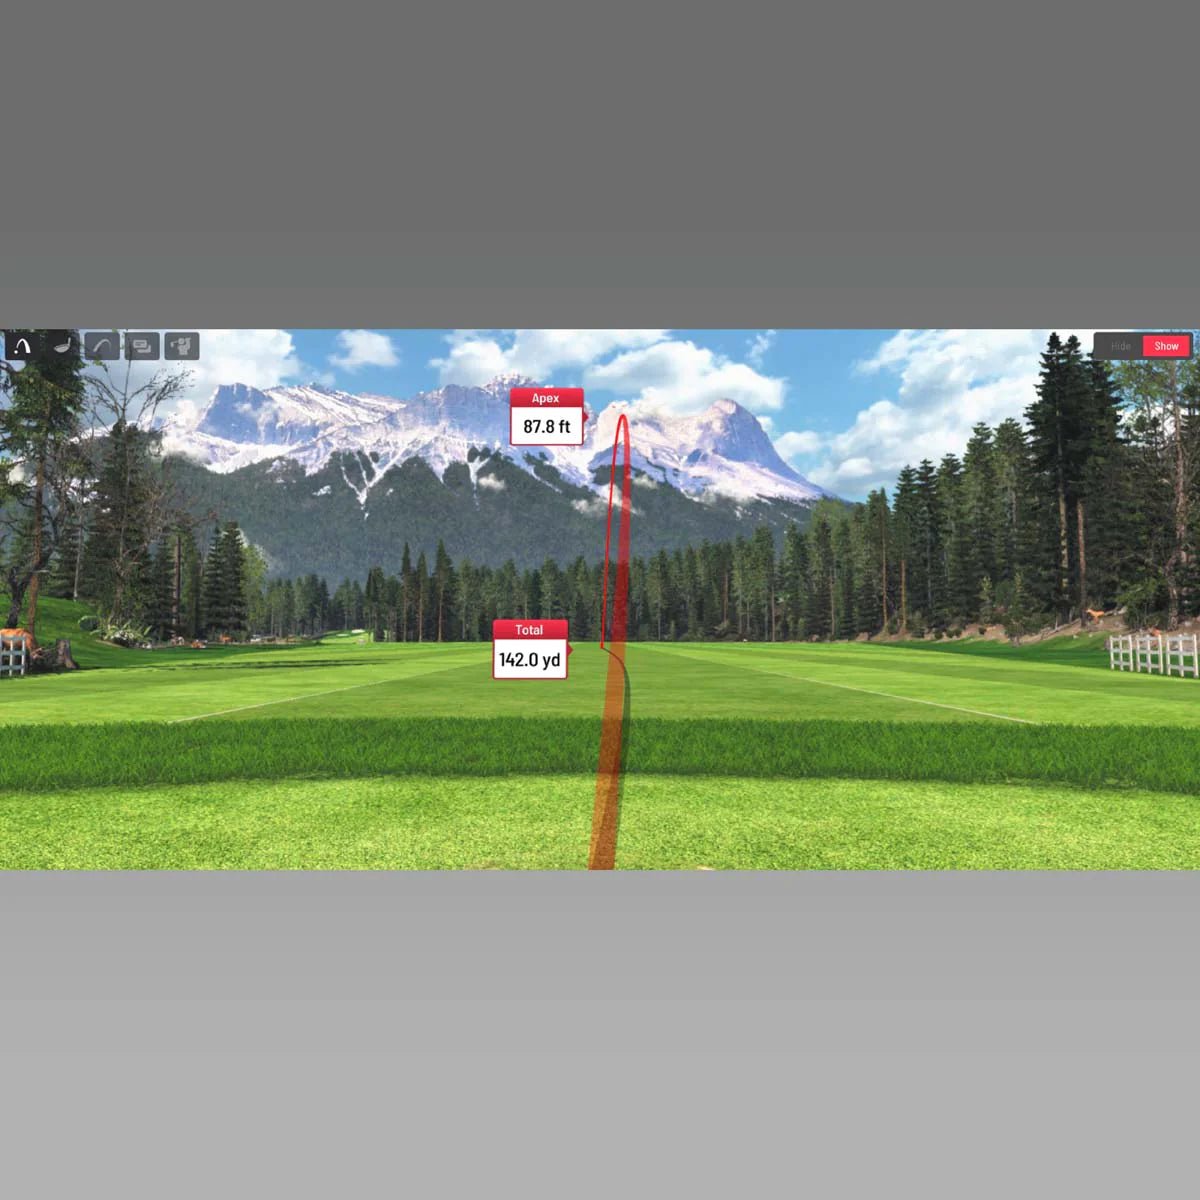 Uneekor EYE XO Launch Monitor - Big Horn Golfer